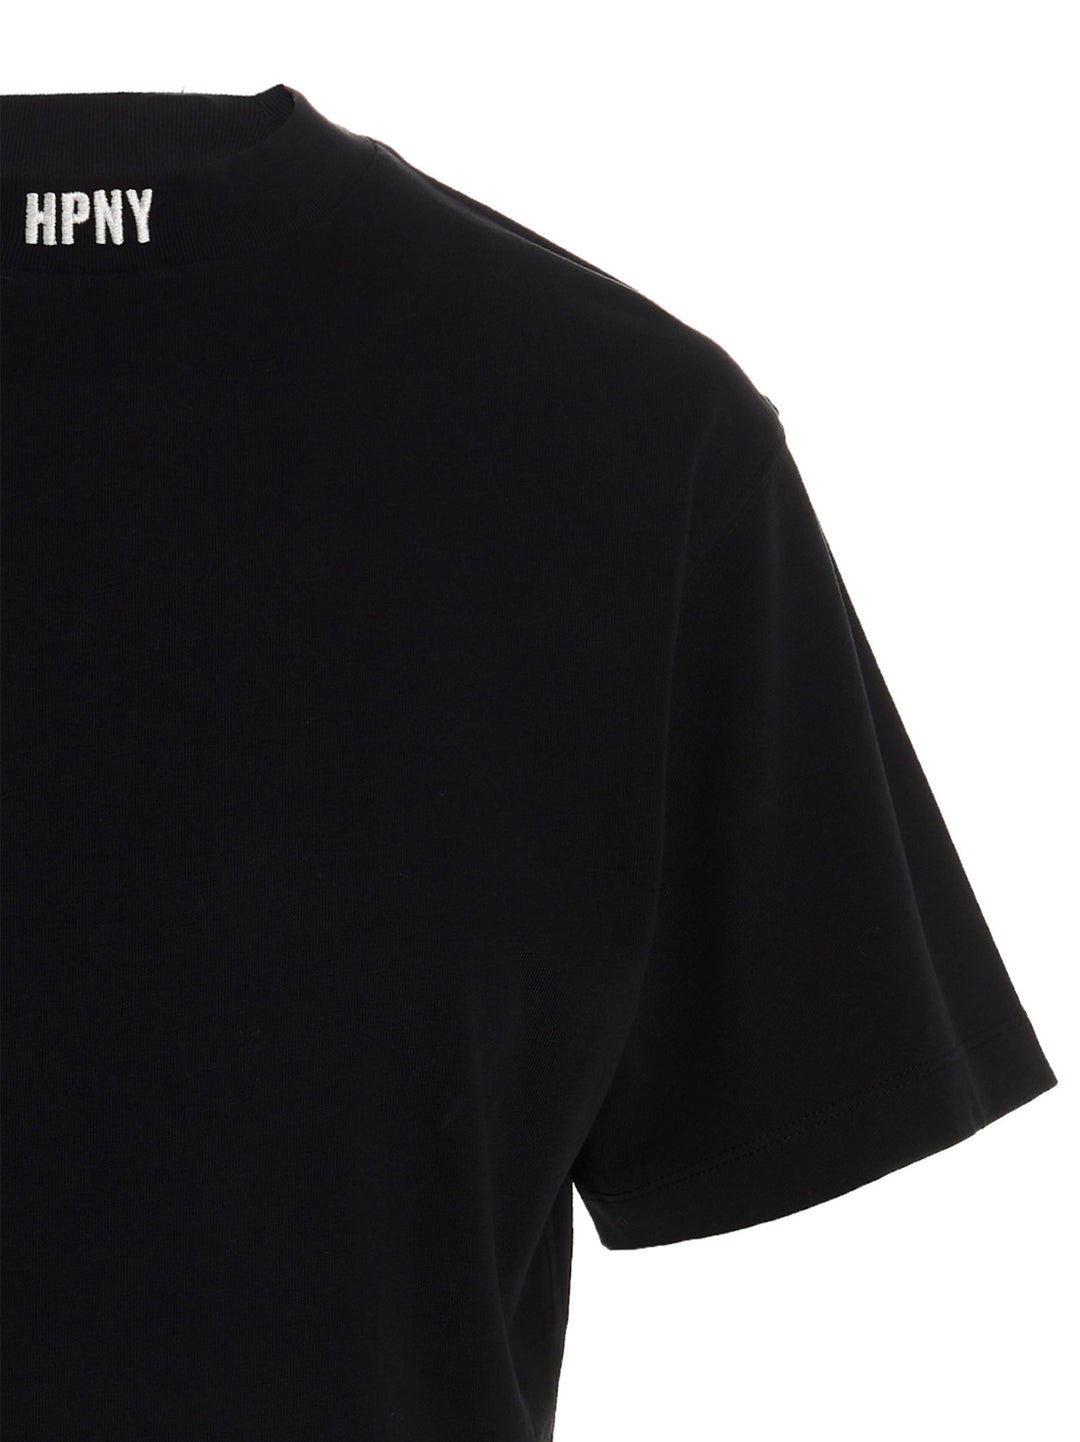 Hpny T Shirt Bianco/Nero